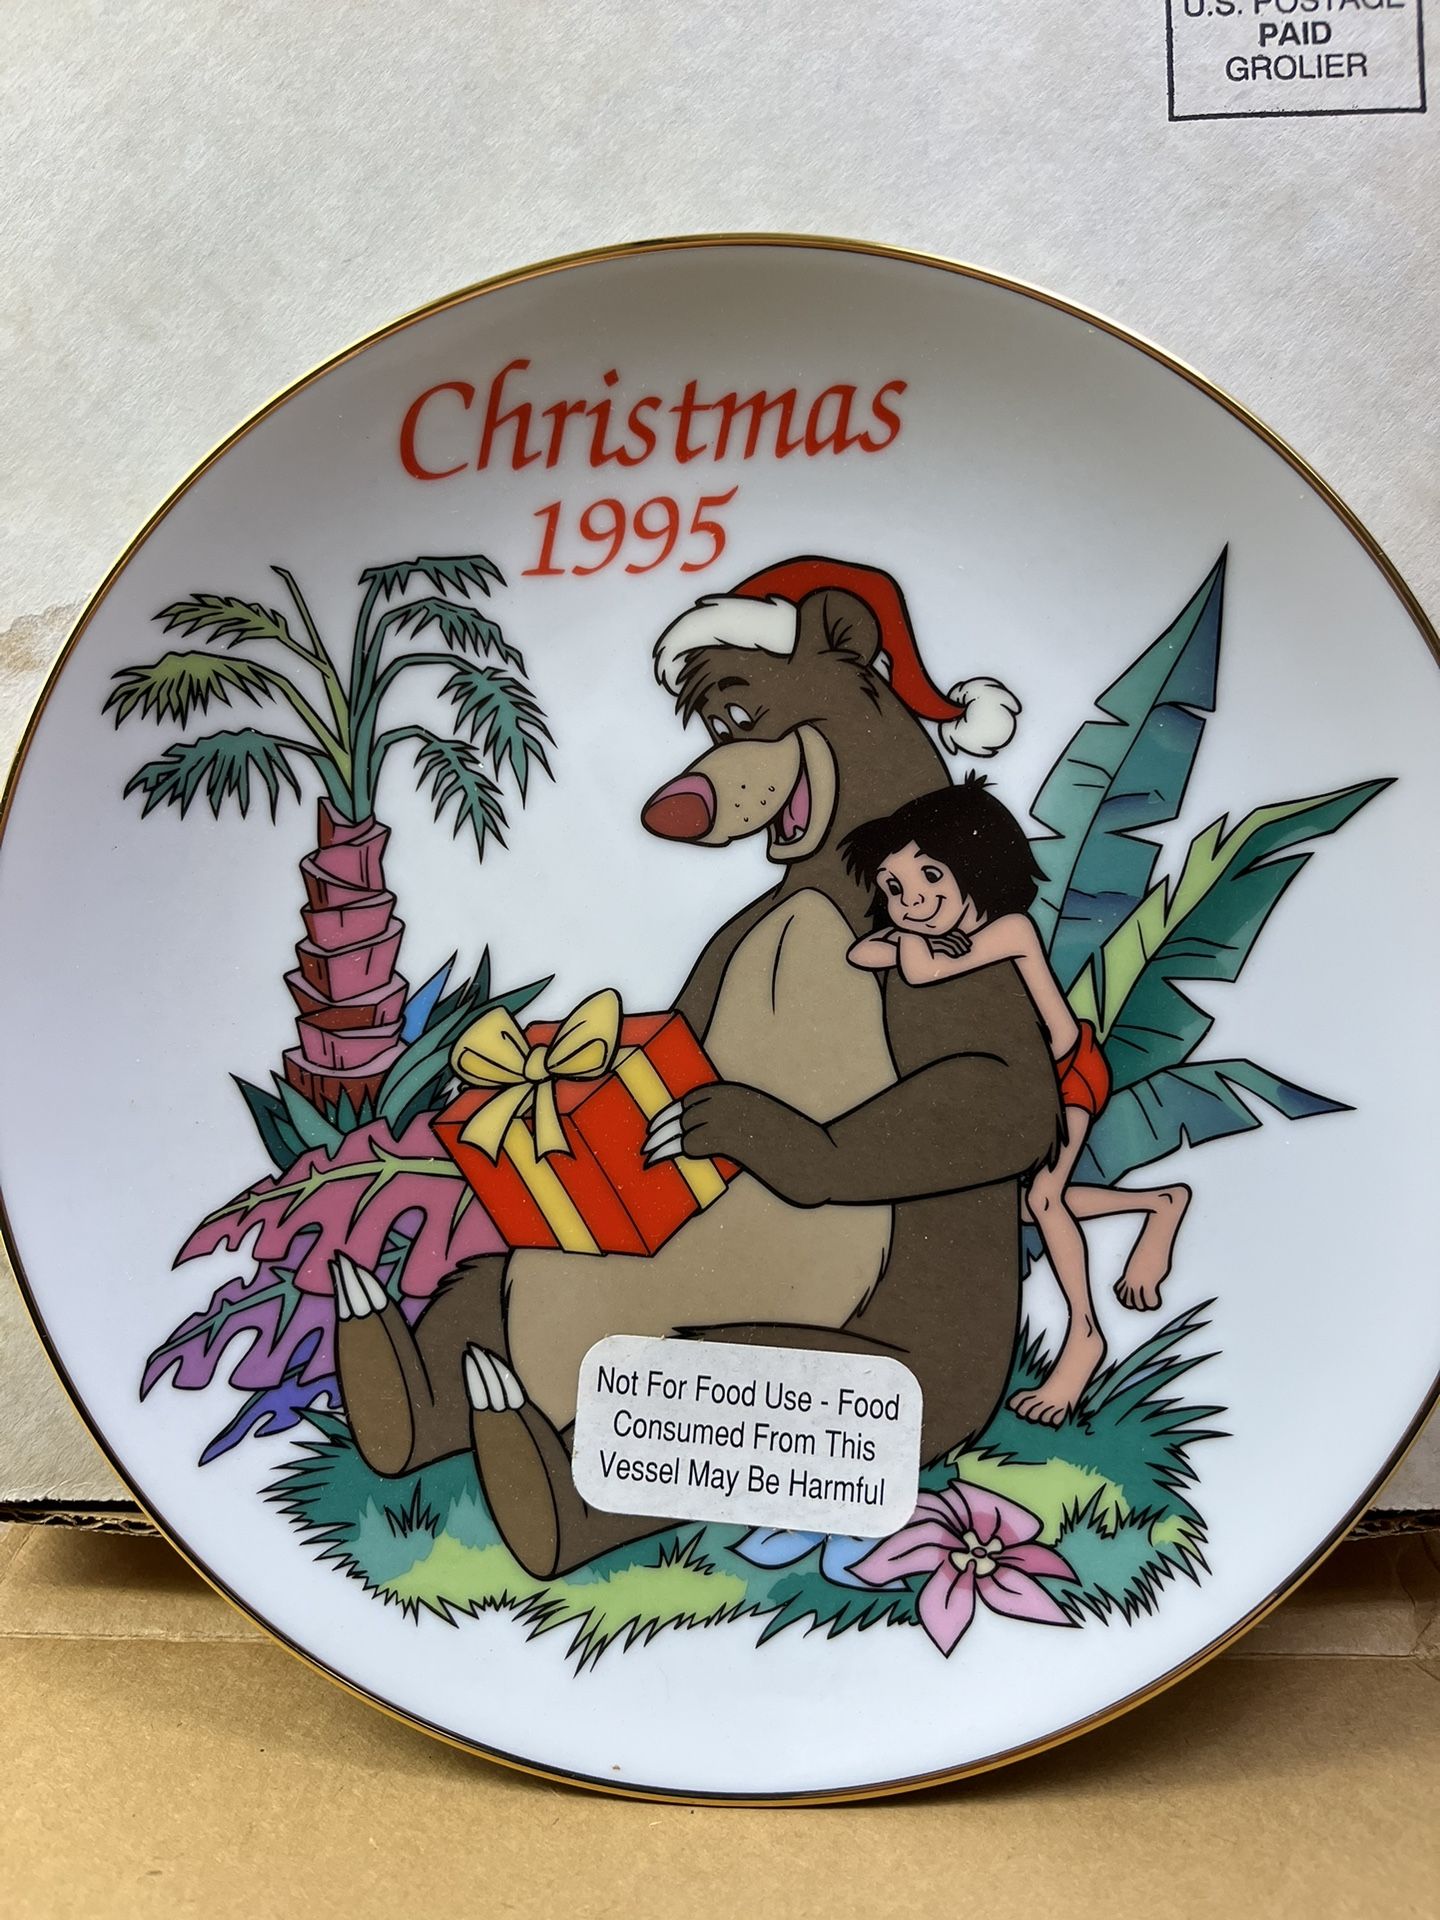 Grolier Disney Christmas Plate 